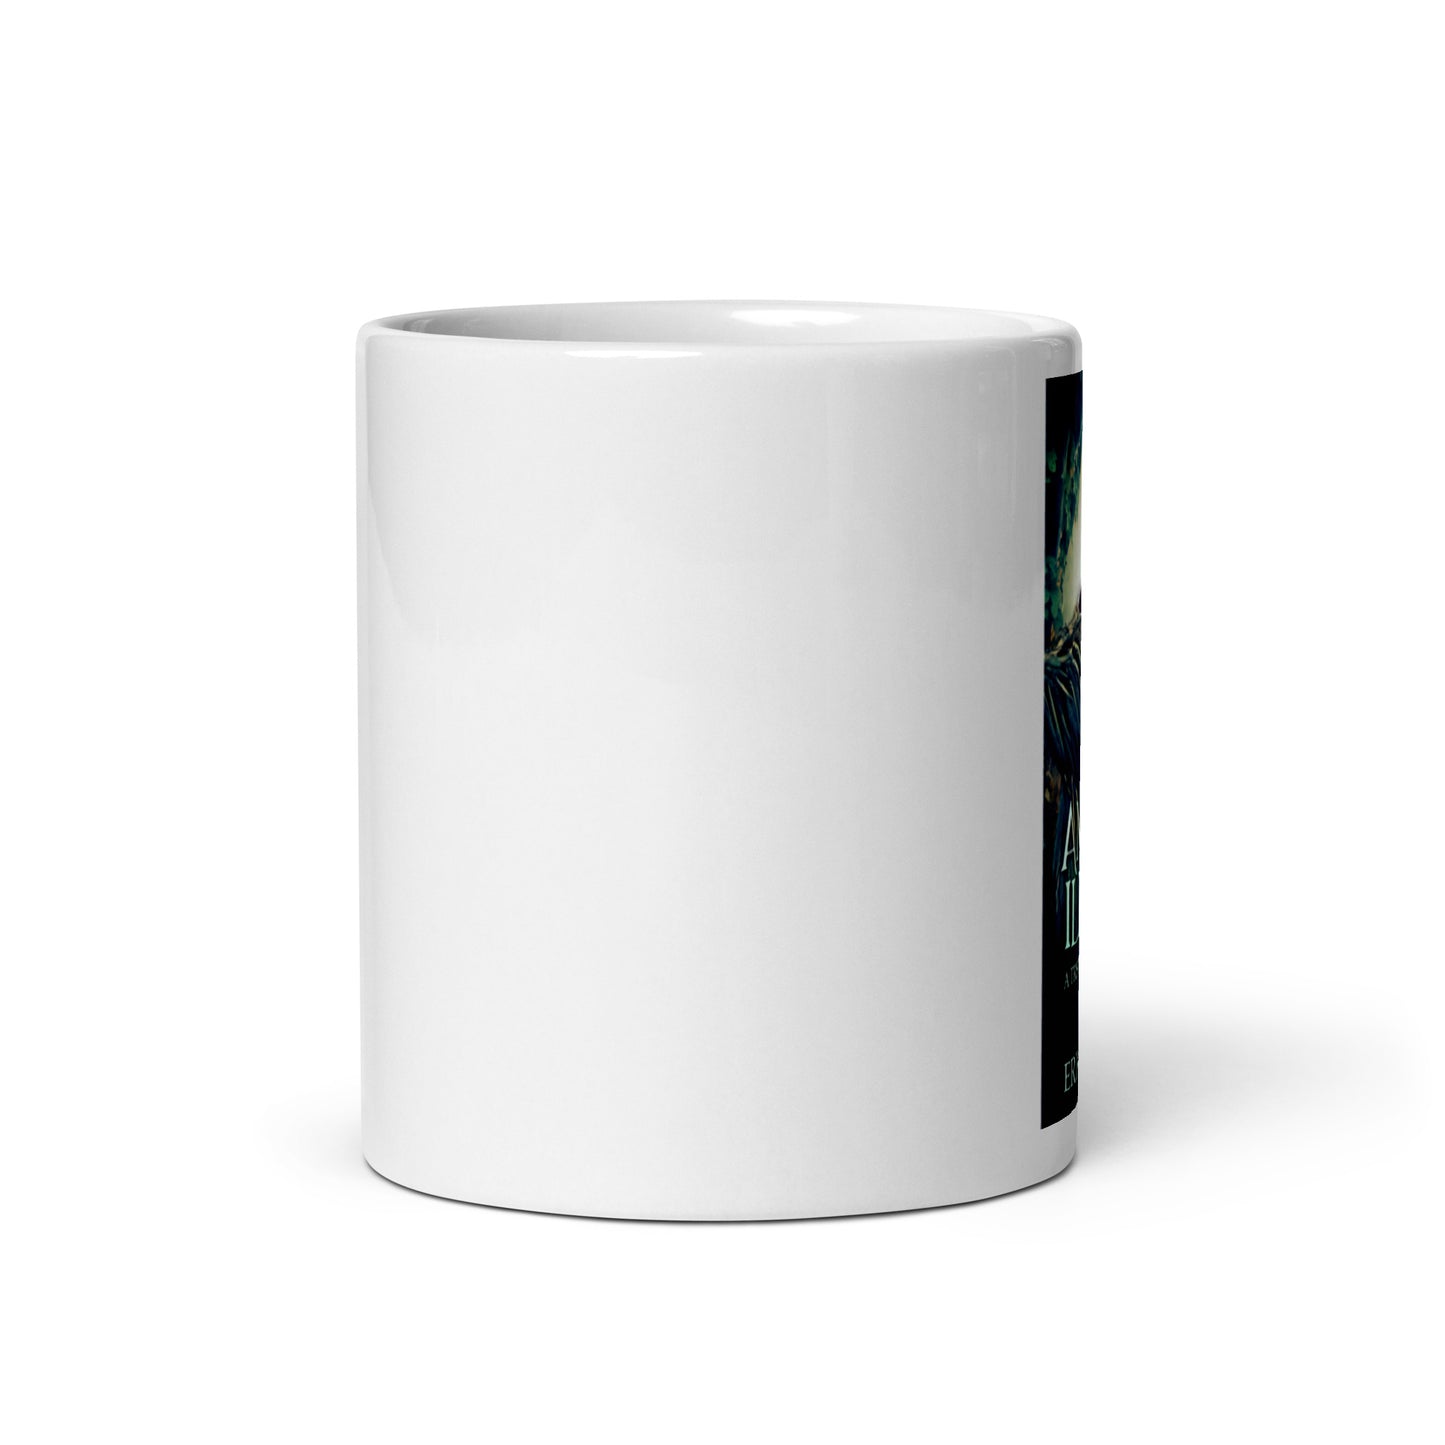 Antidote Illusions - White Coffee Mug